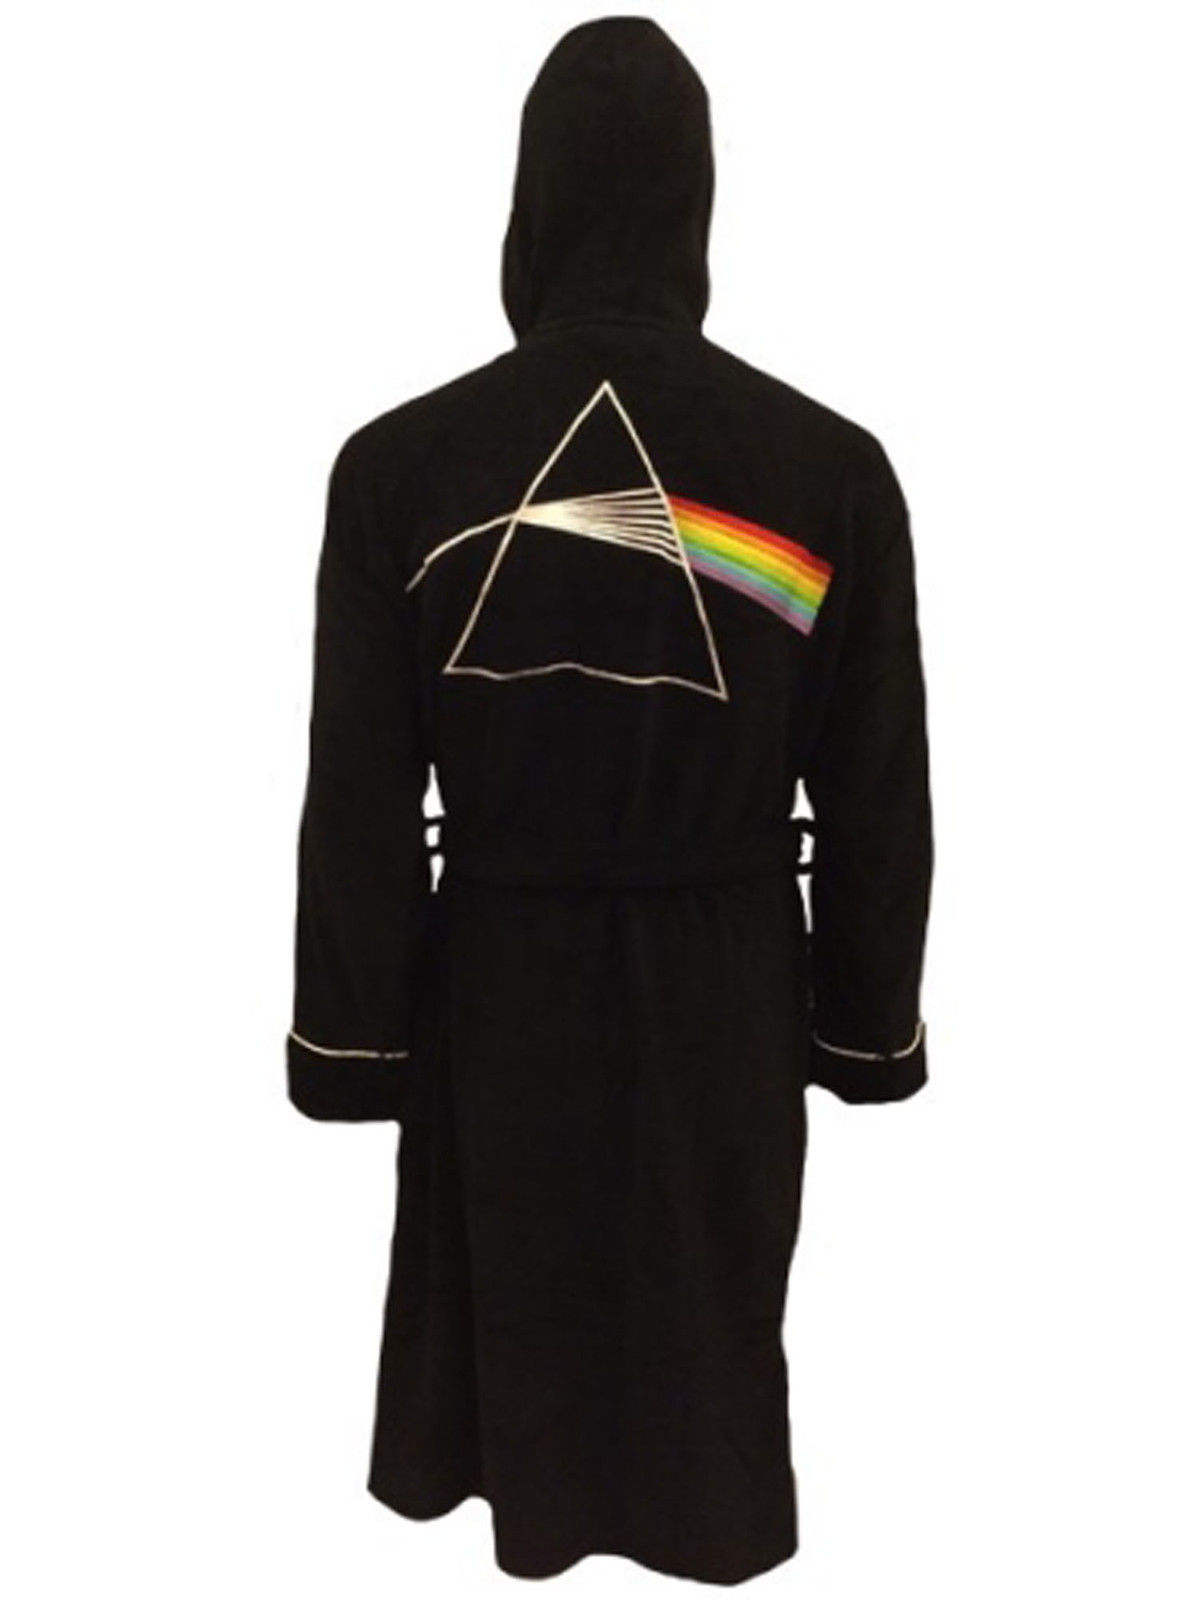 Pink Floyd Fleece Bathrobe Suitable for Bath Robe or Gown Premium Quality New